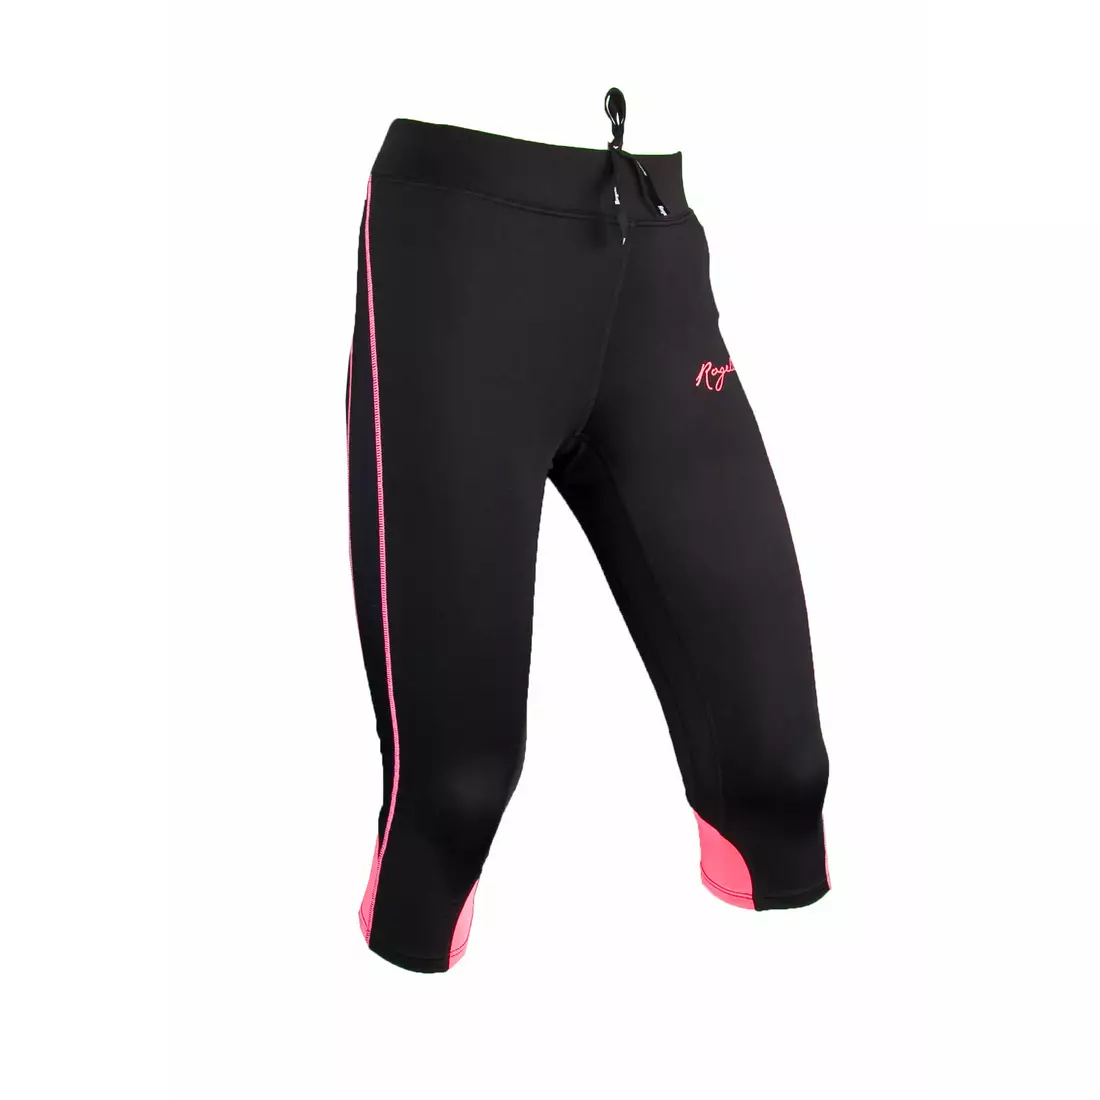 ROGELLI SUEZ dámské běžecké šortky 840.742, 3/4 nohavice, černo-růžové